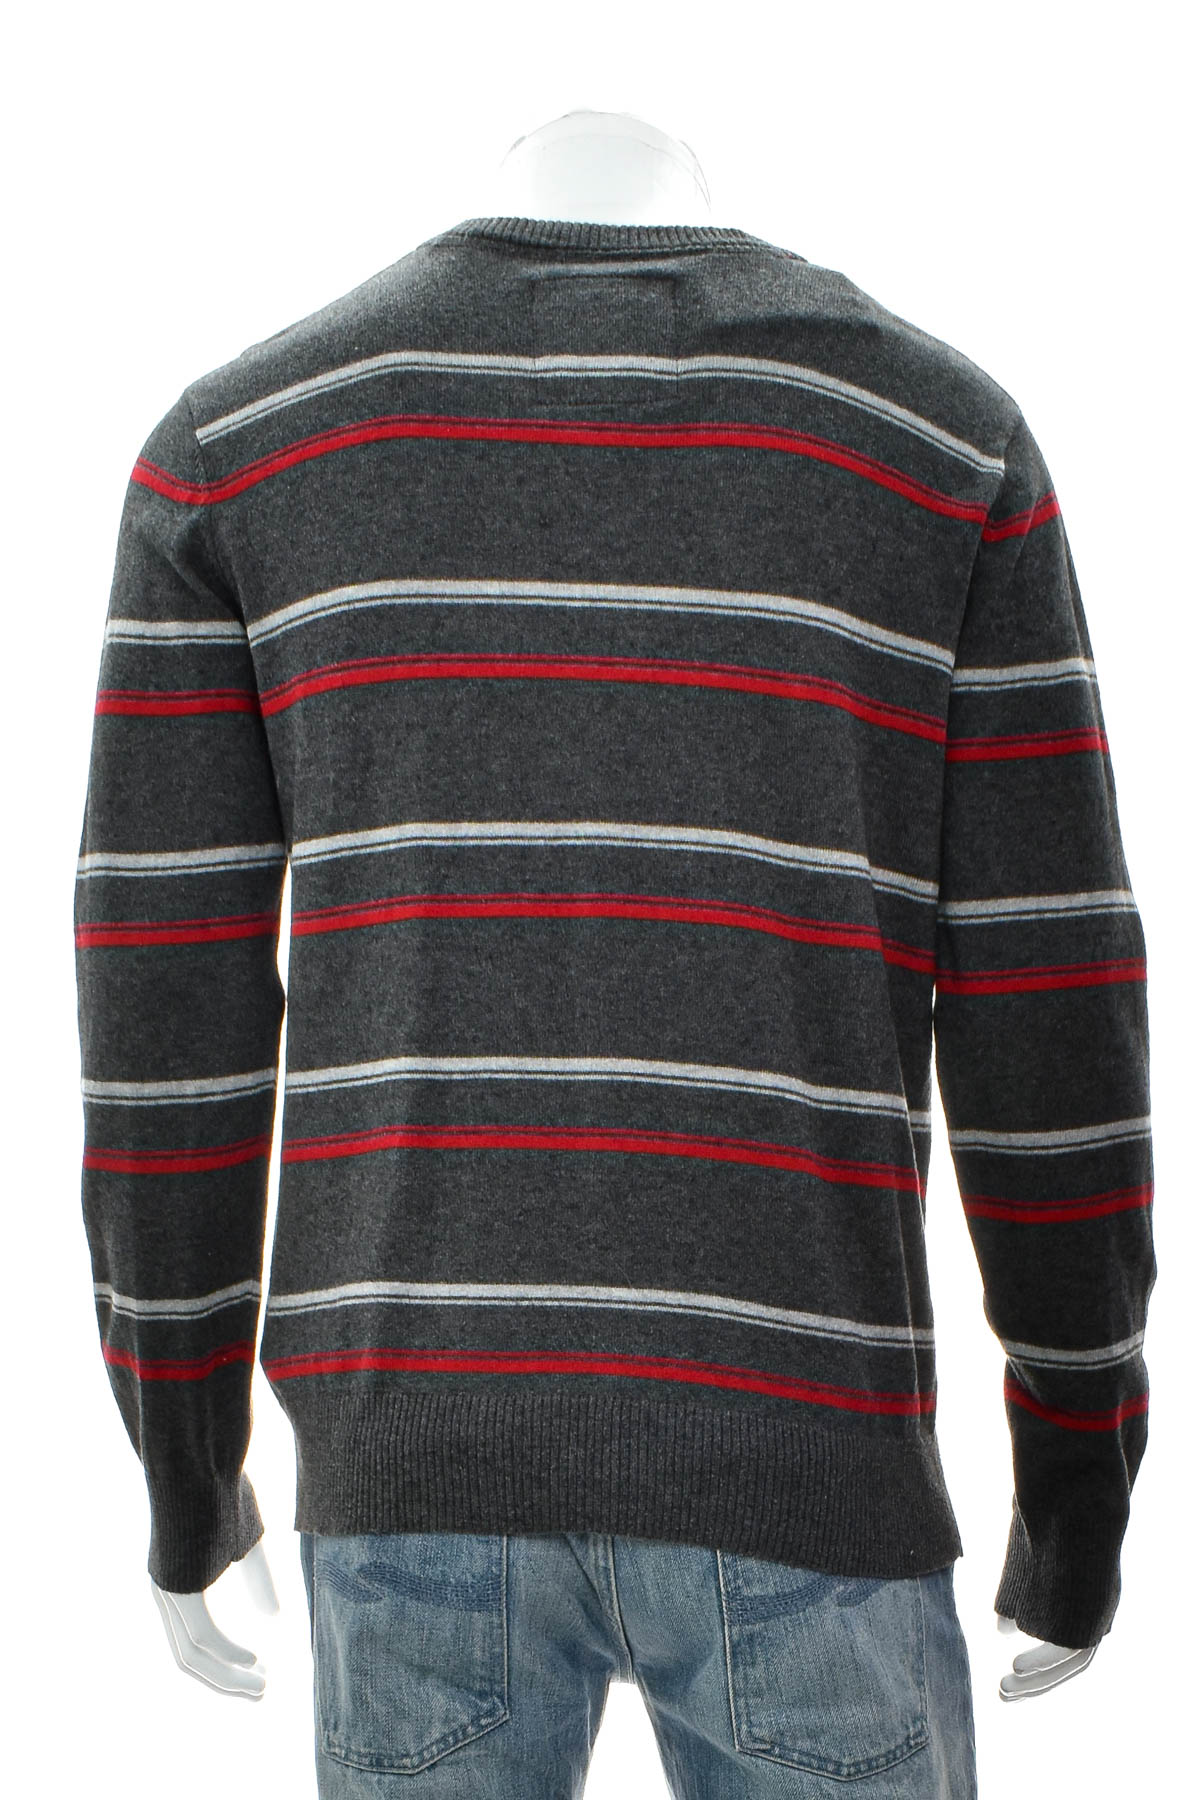 Men's sweater - Aeropostale - 1